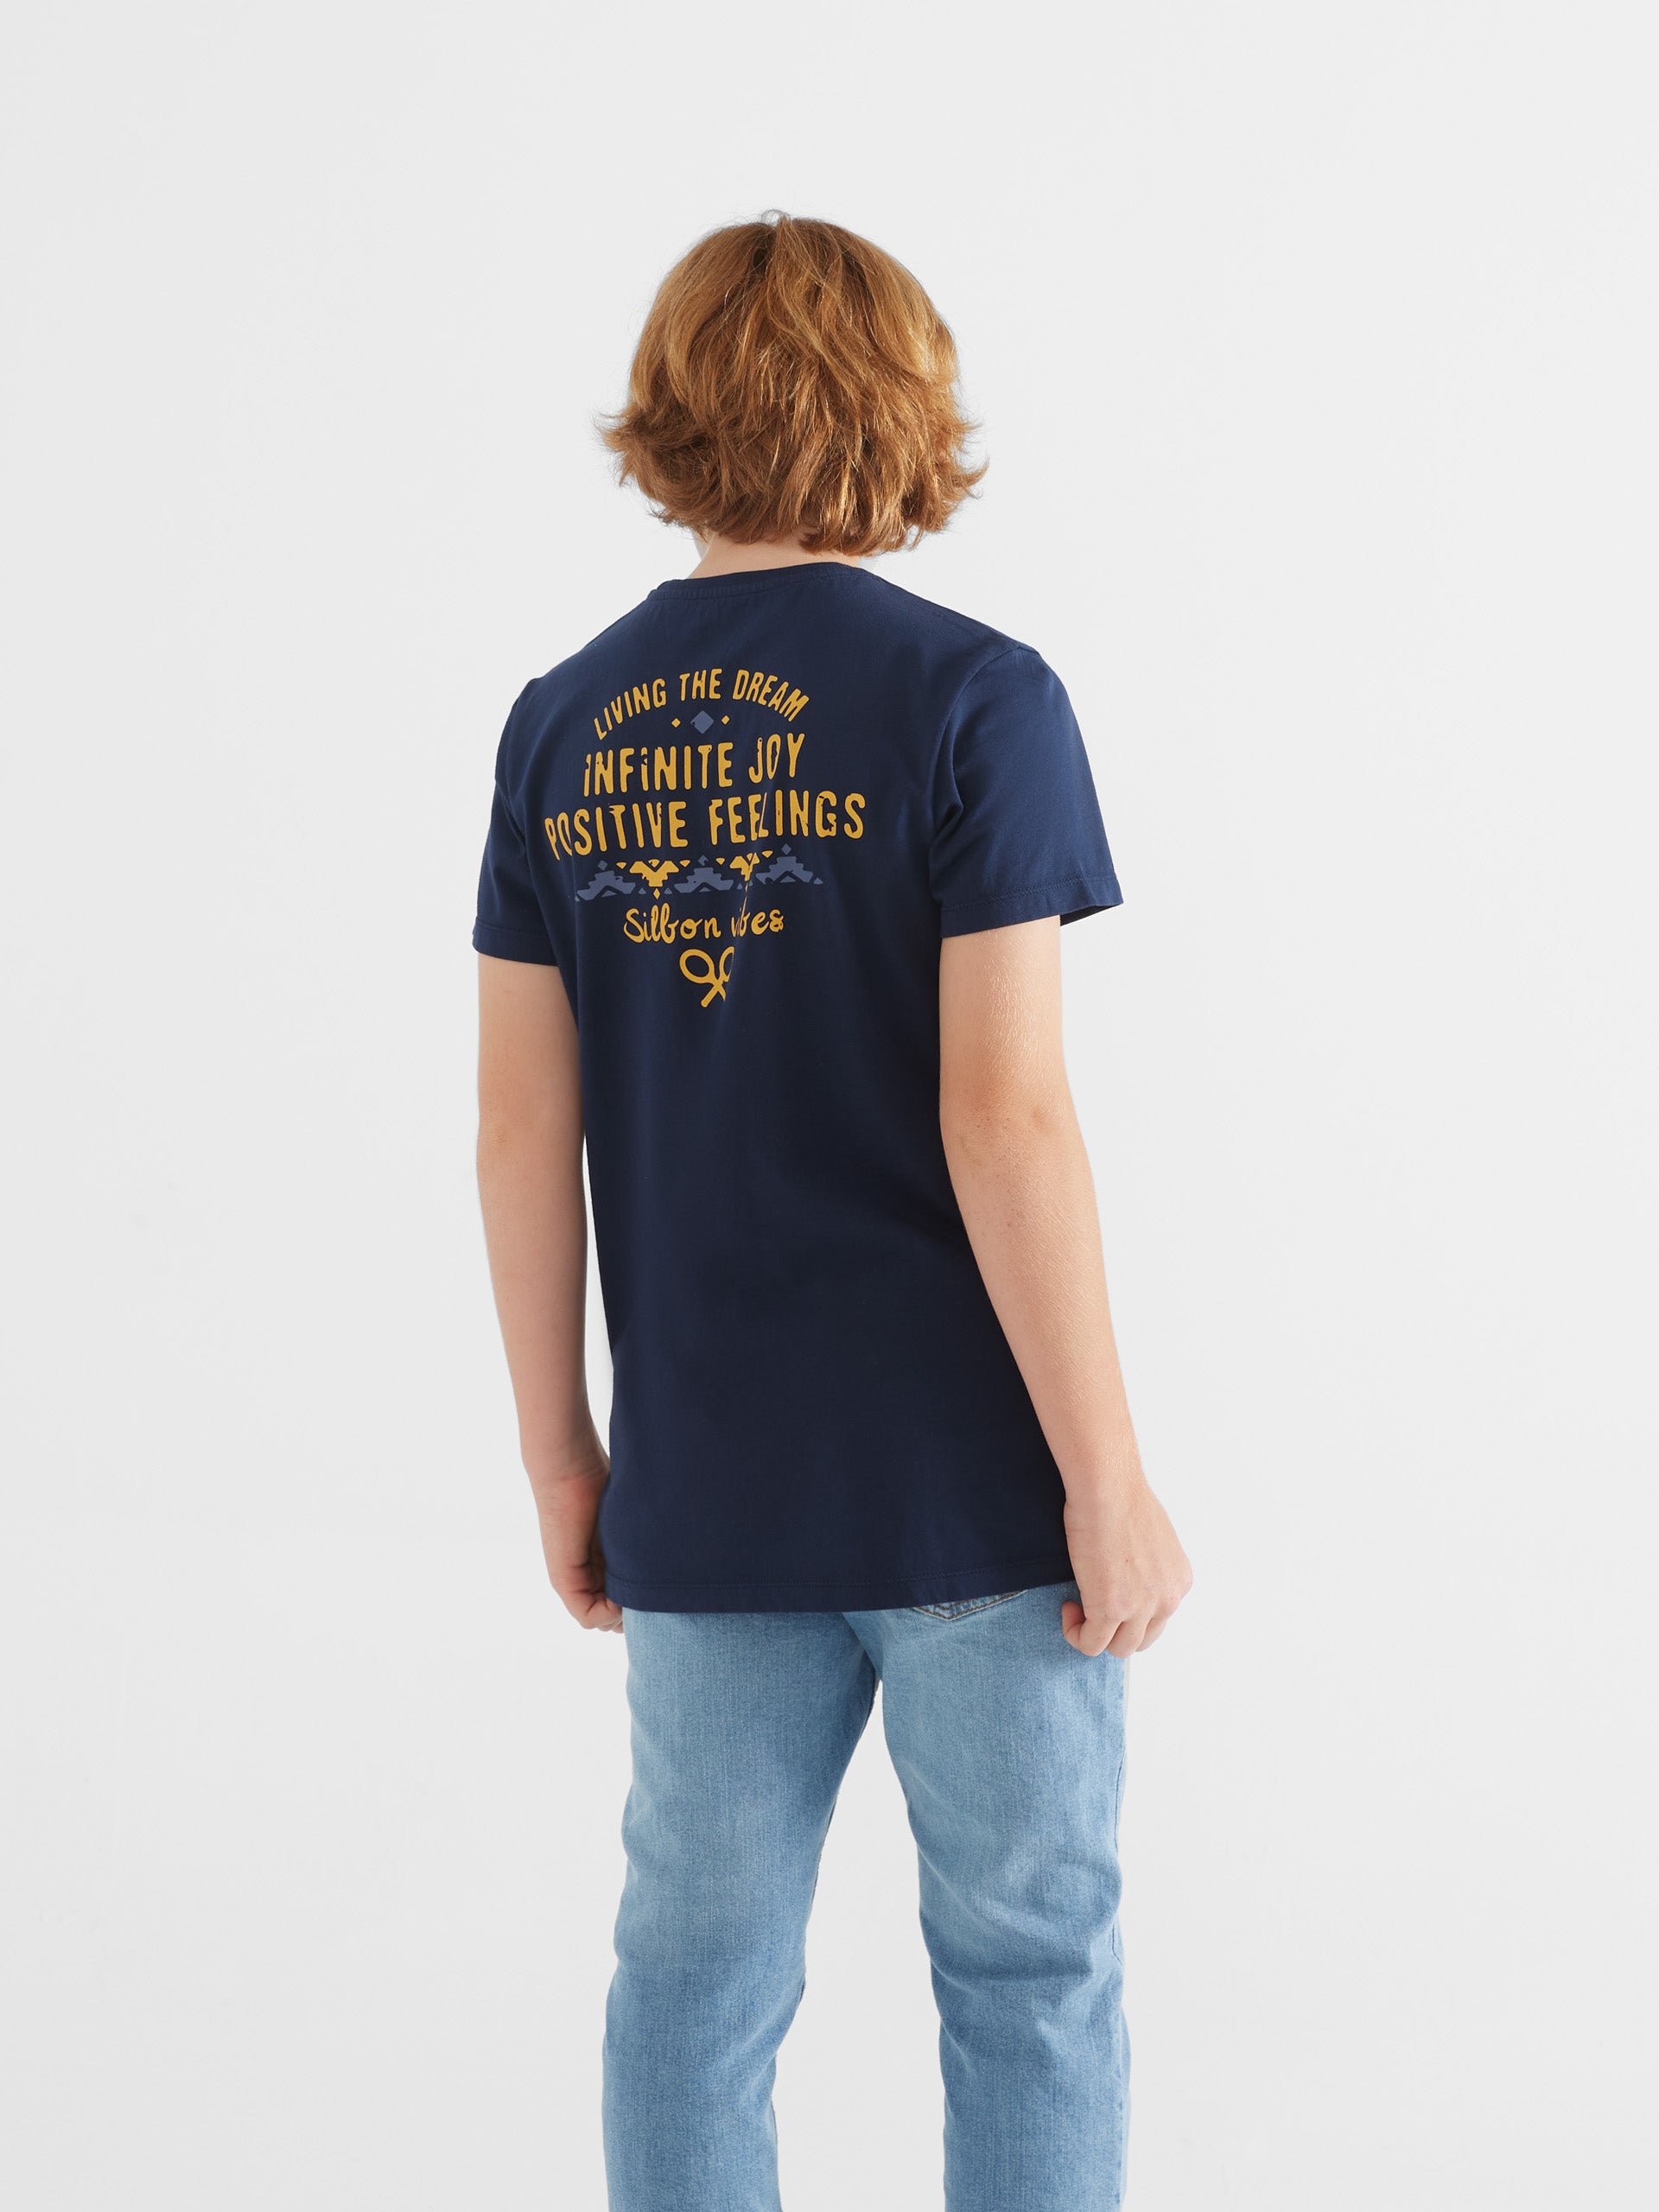 Camiseta kids positive feelings azul marino